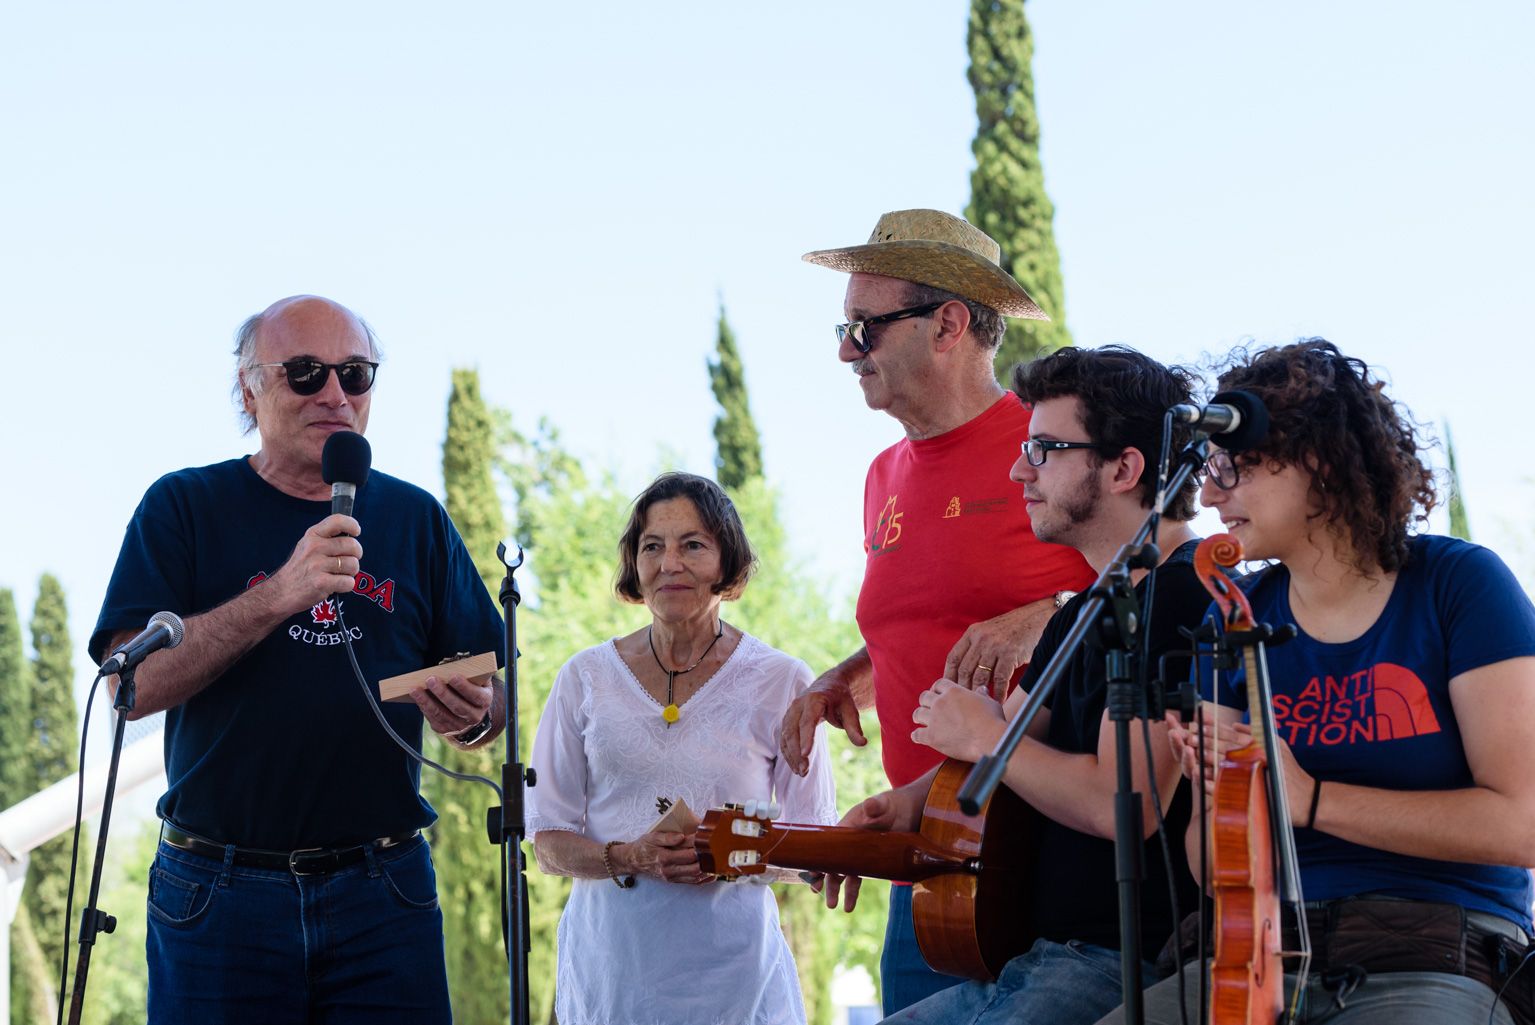 75è aniversari del Club Muntanyenc: Paella popular de germanor i actuació musical al Parc de Ramon Barnils. FOTO: Miguel López Mallach